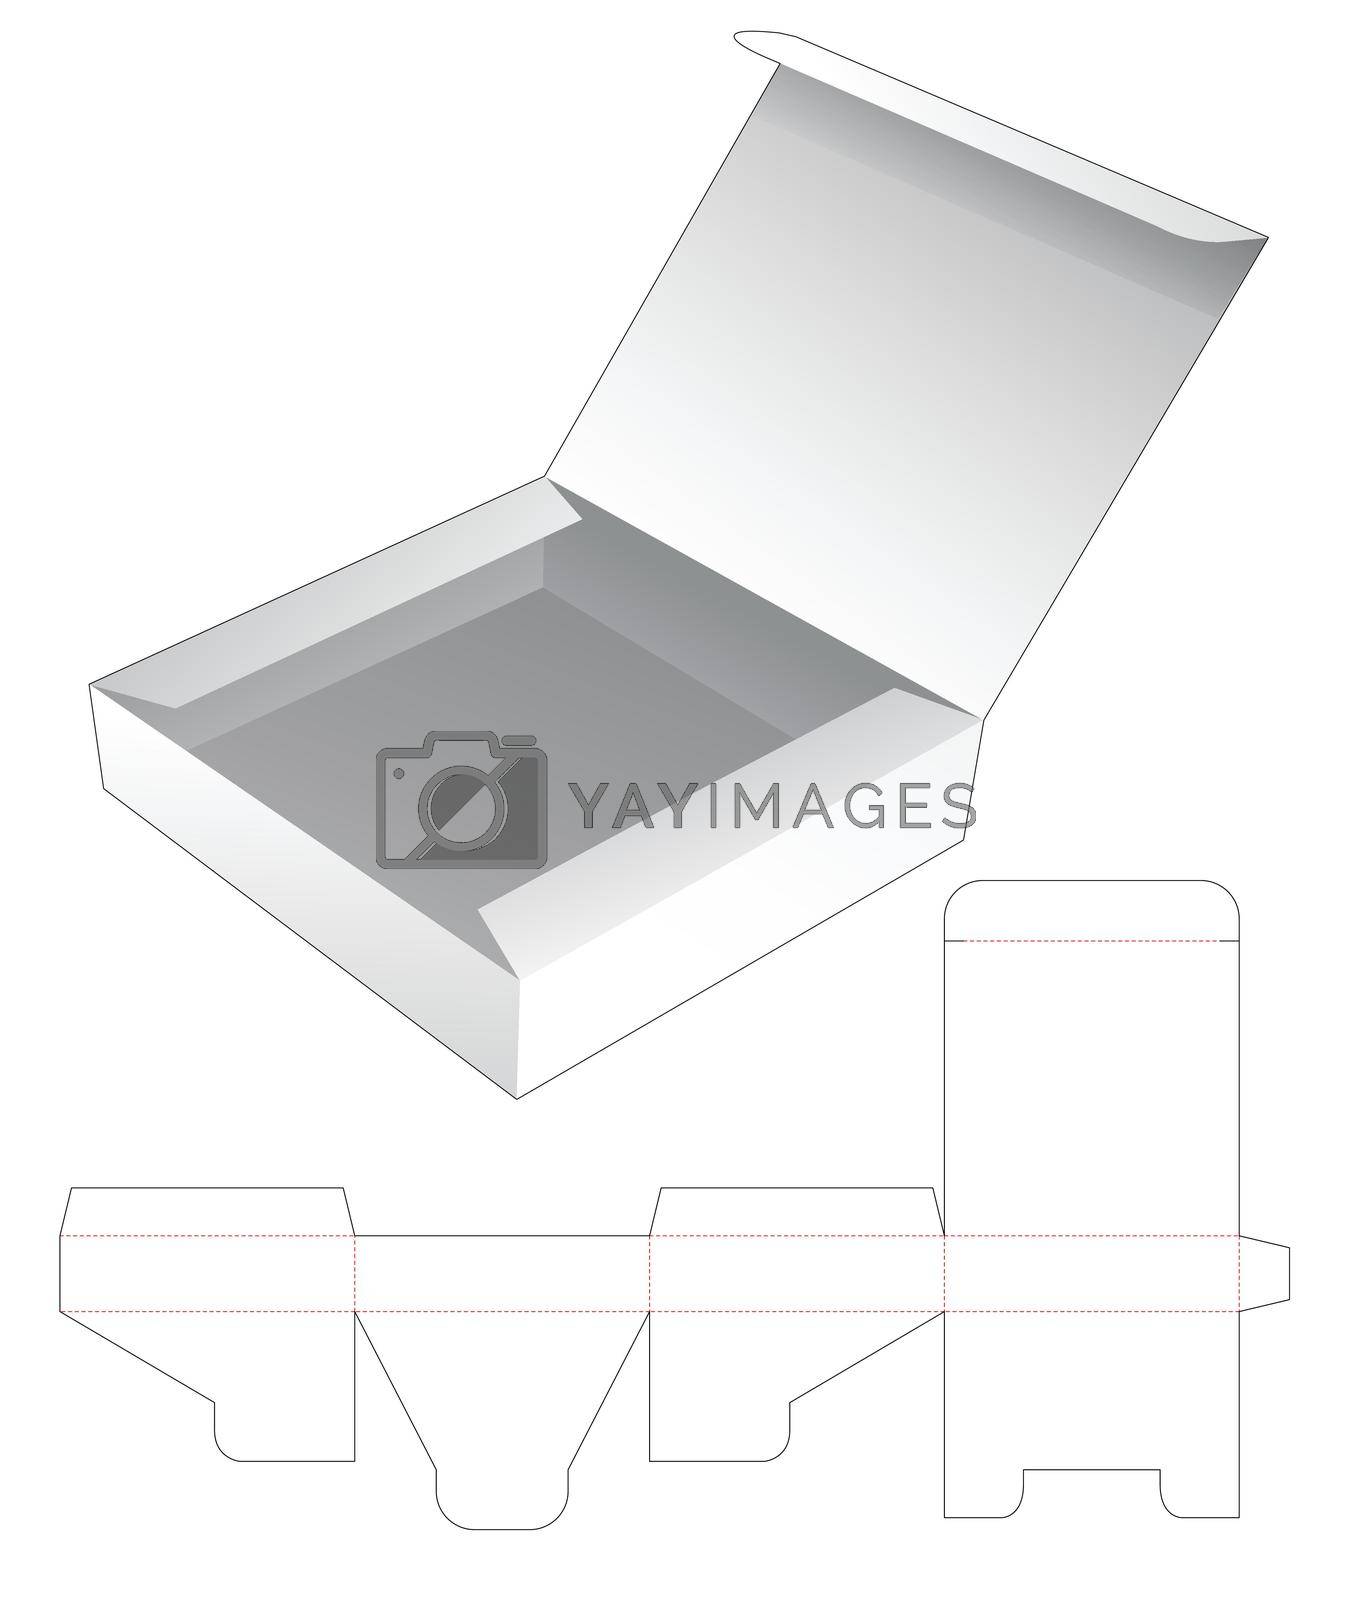 Royalty free image of Cardboard flip pizza box die cut template by valueinvestor